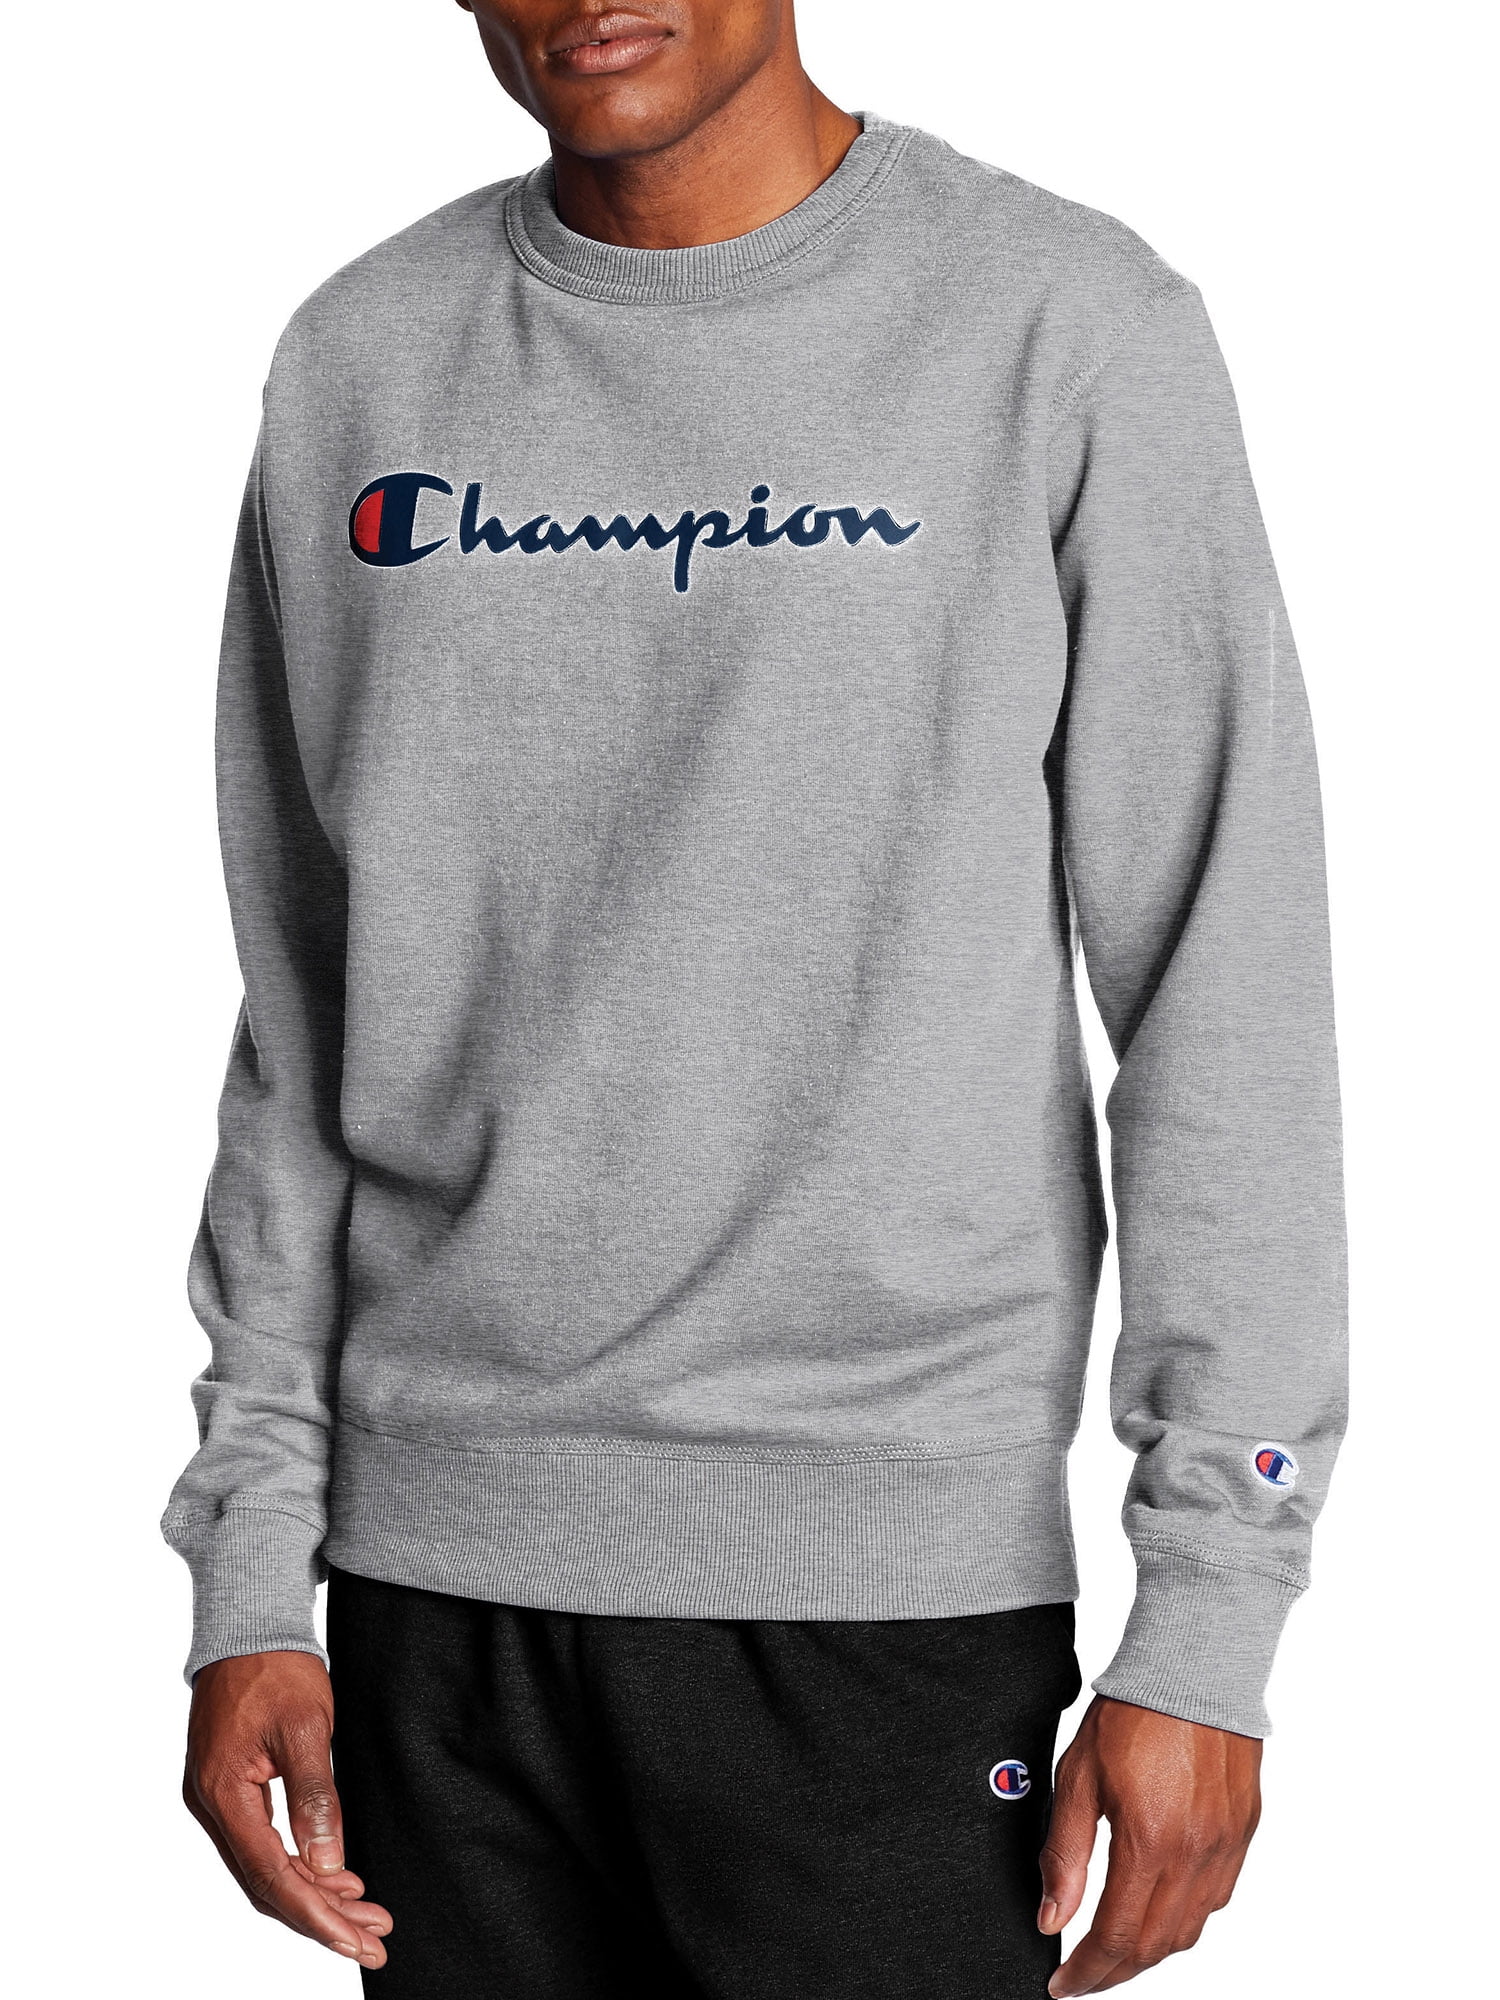 Champion and Big Men's Crewneck Sweatshirt, up to 2XL - Walmart.com